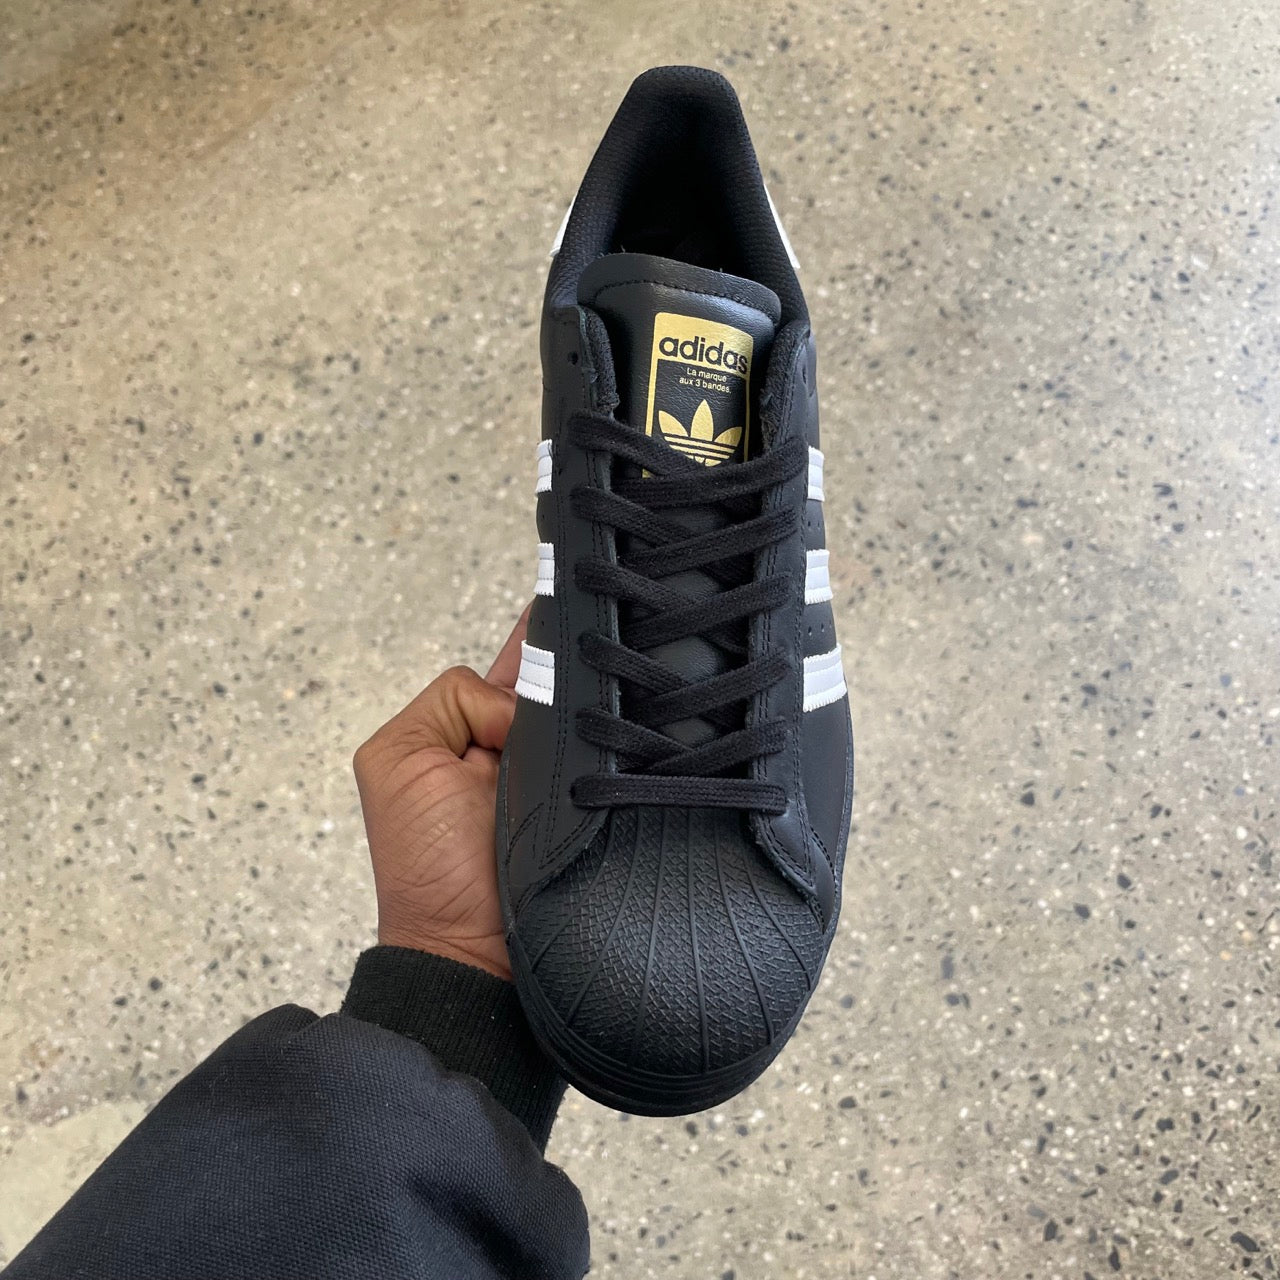 Adidas Superstar ADV - Black (Leather)